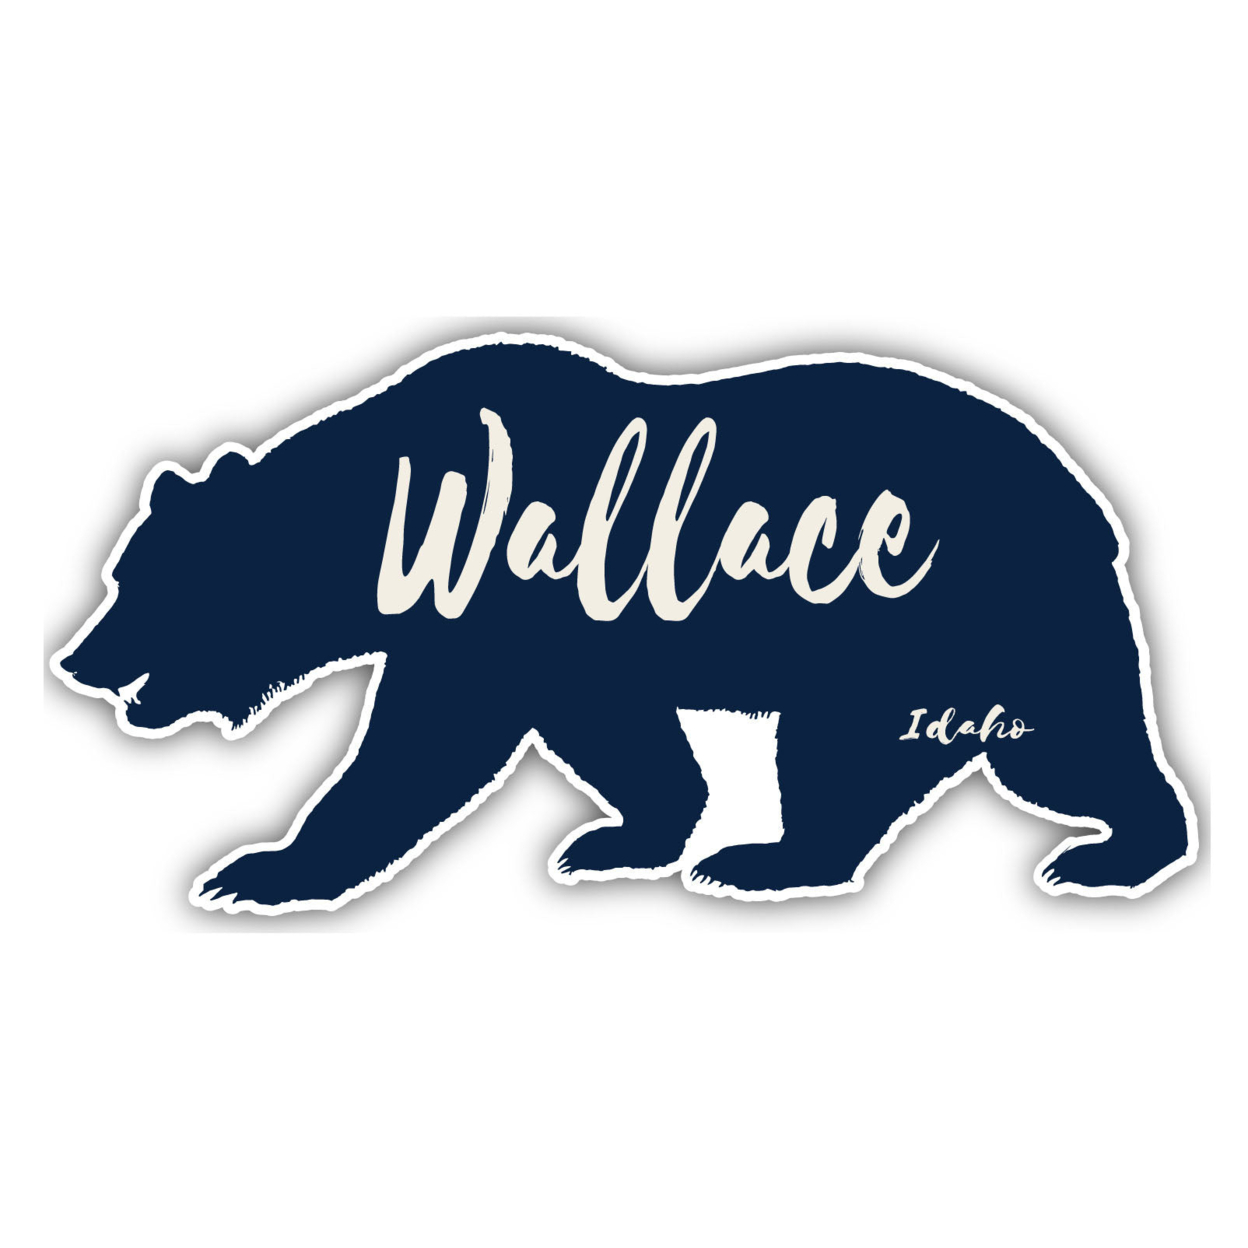 Wallace Idaho Souvenir Decorative Stickers (Choose Theme And Size) - Single Unit, 2-Inch, Bear